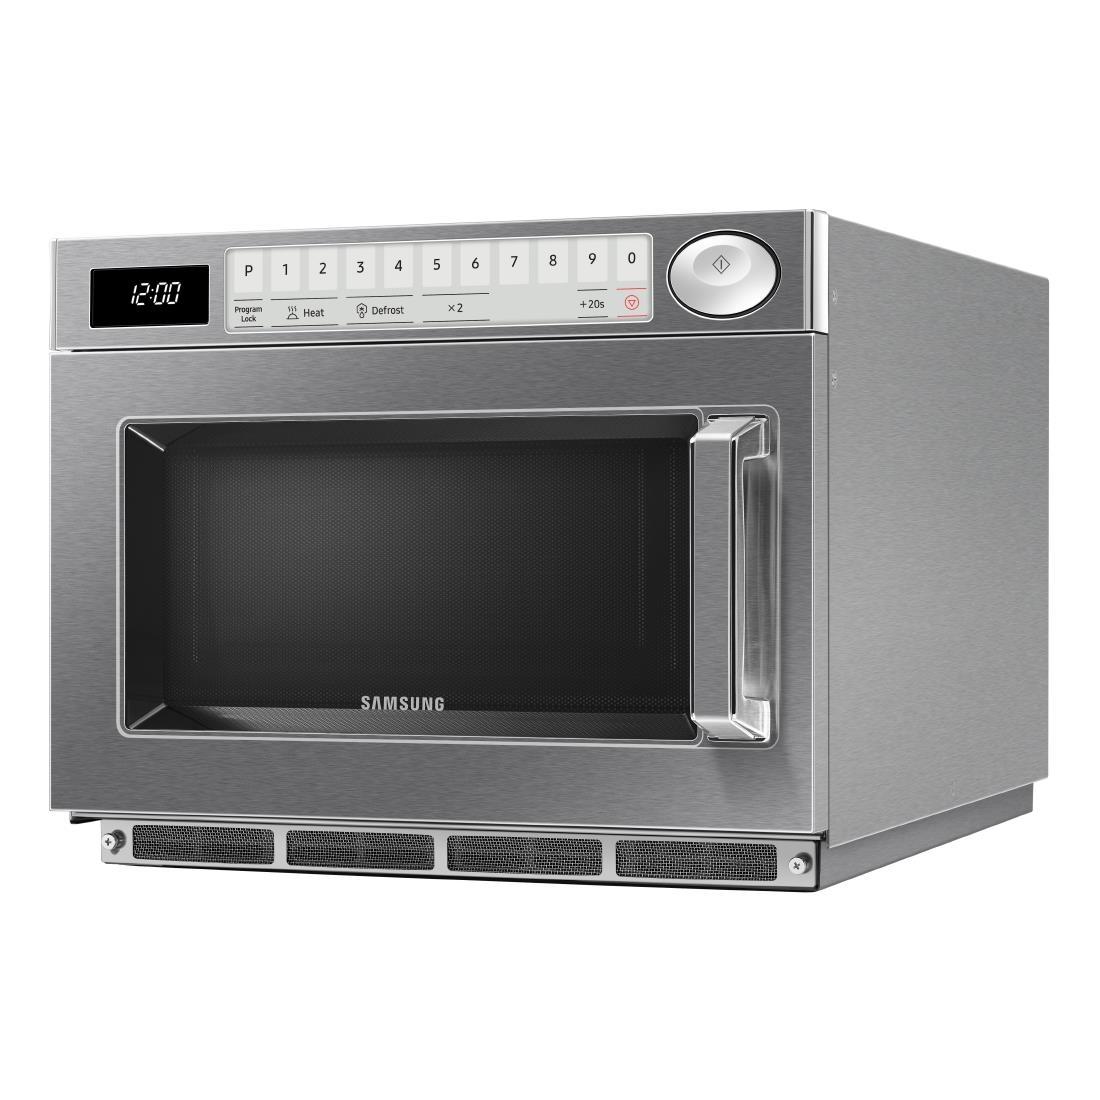 Samsung Commercial Microwave Digital 26Ltr 1000W - FS319  - 2